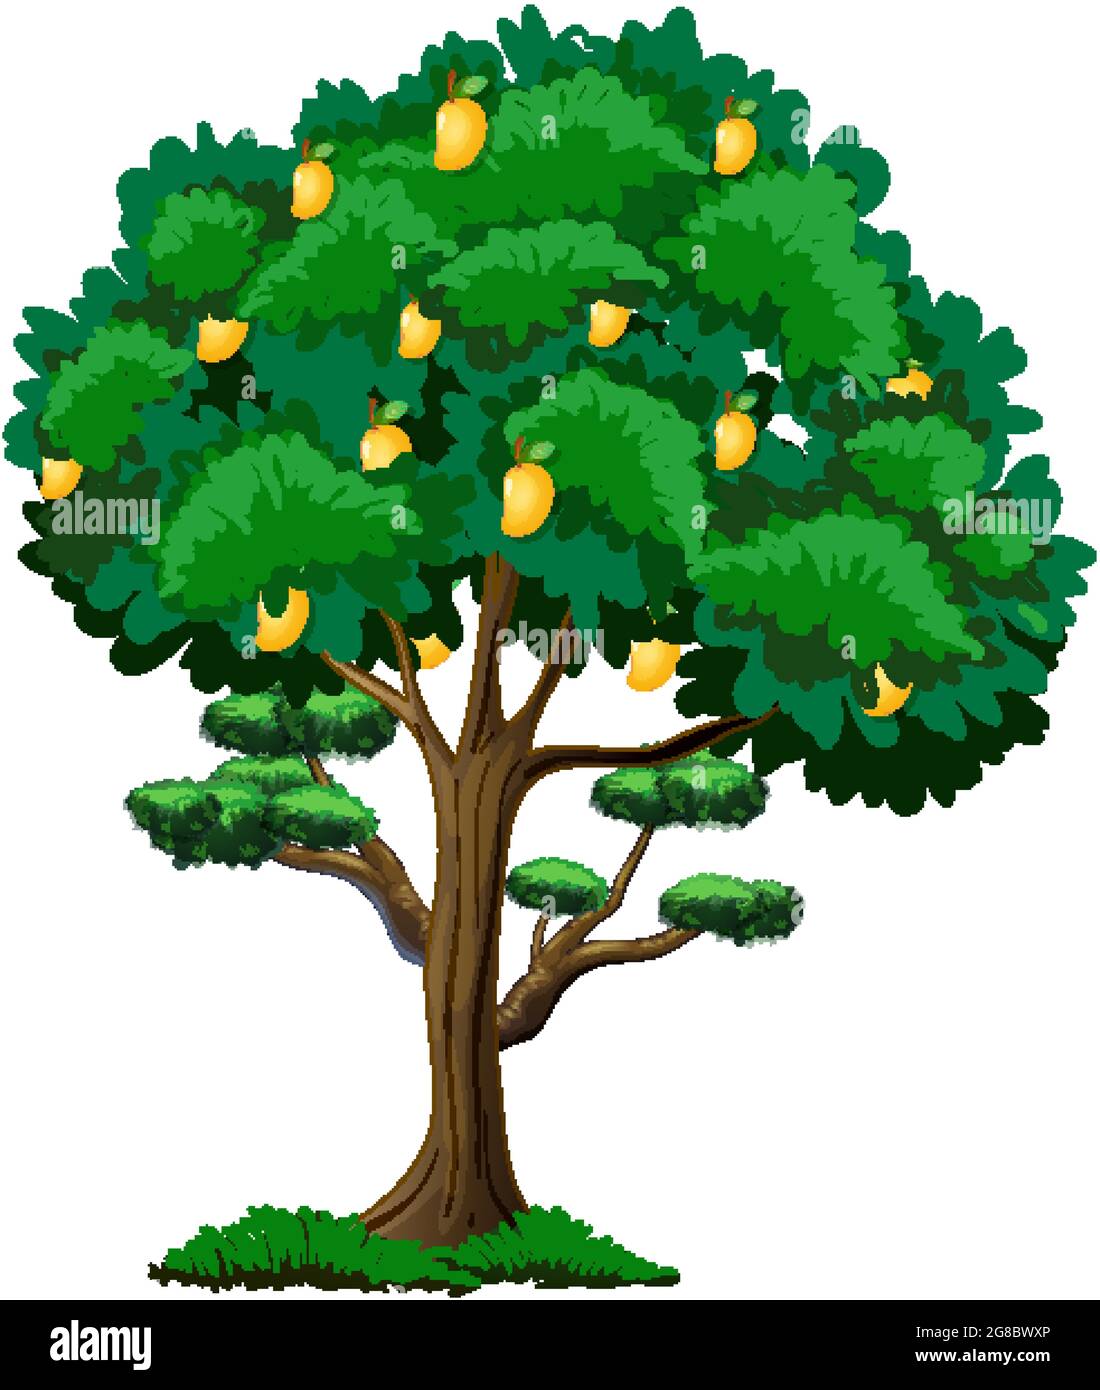 How to Draw a Mango Tree Easy Step by Step - YouTube-saigonsouth.com.vn